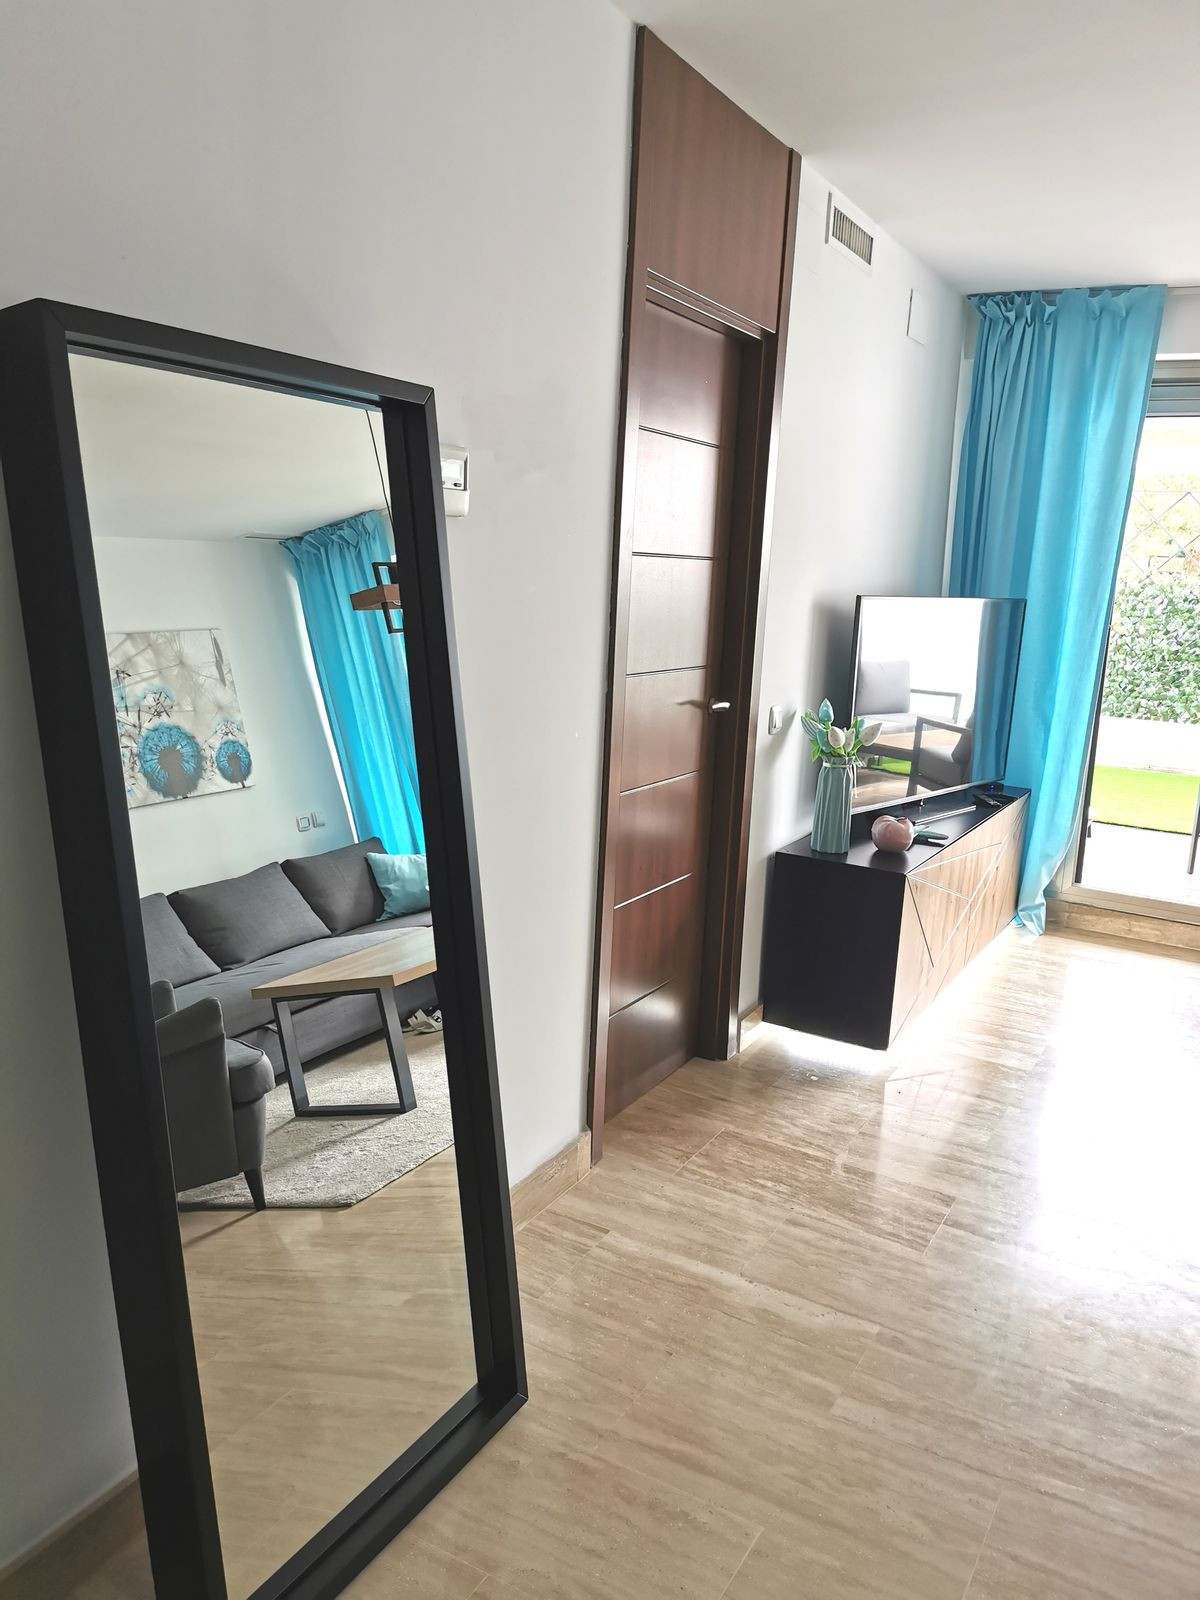 1 bedroom Apartment For Sale in Mijas, Málaga - thumb 20